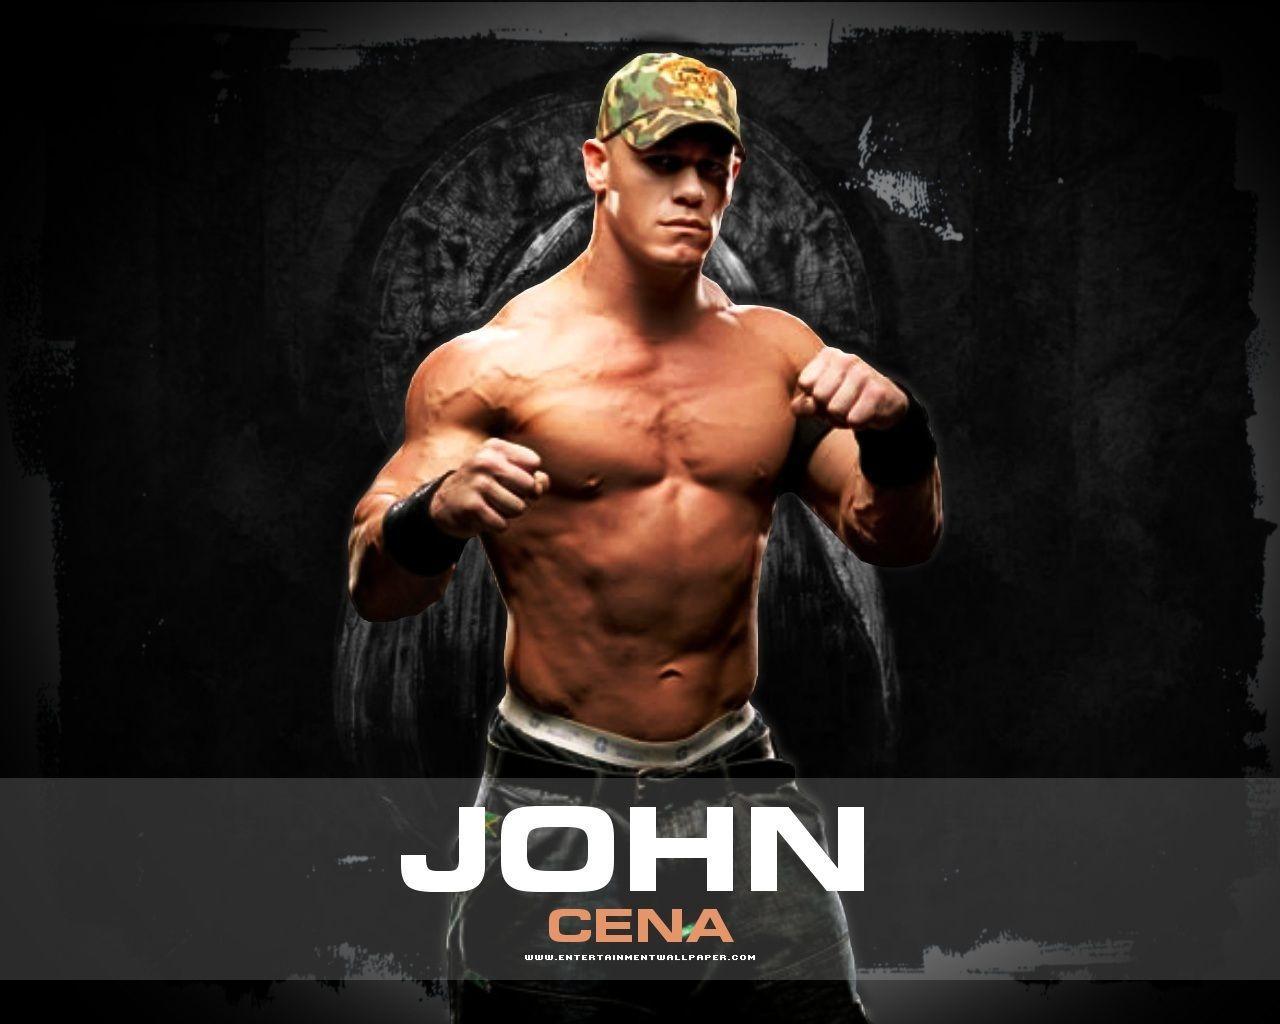 John Cena Wallpaper. Daily inspiration art photo, picture